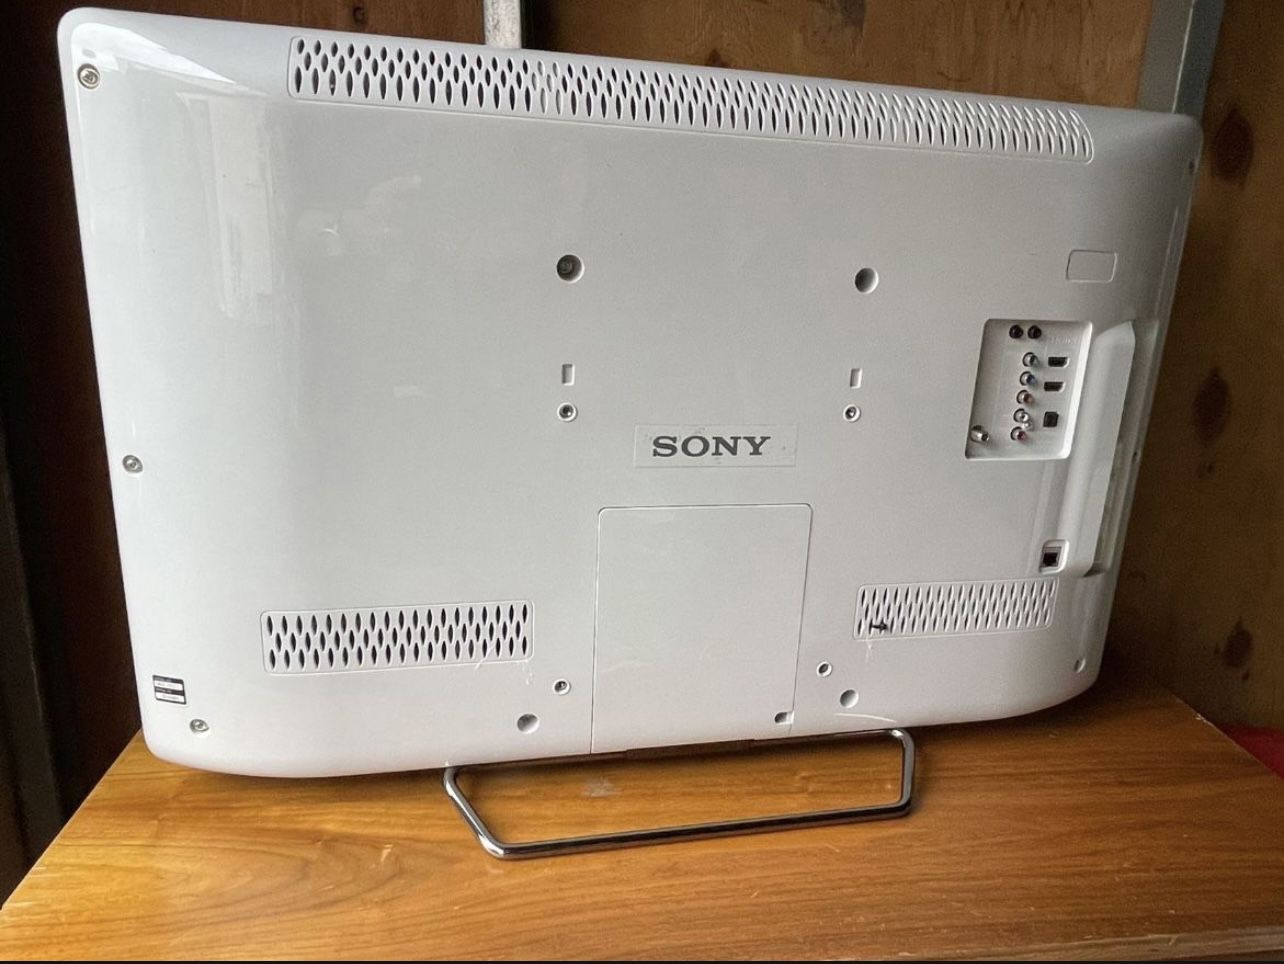 Sony nsx 32gt1 TV Decent Condition 